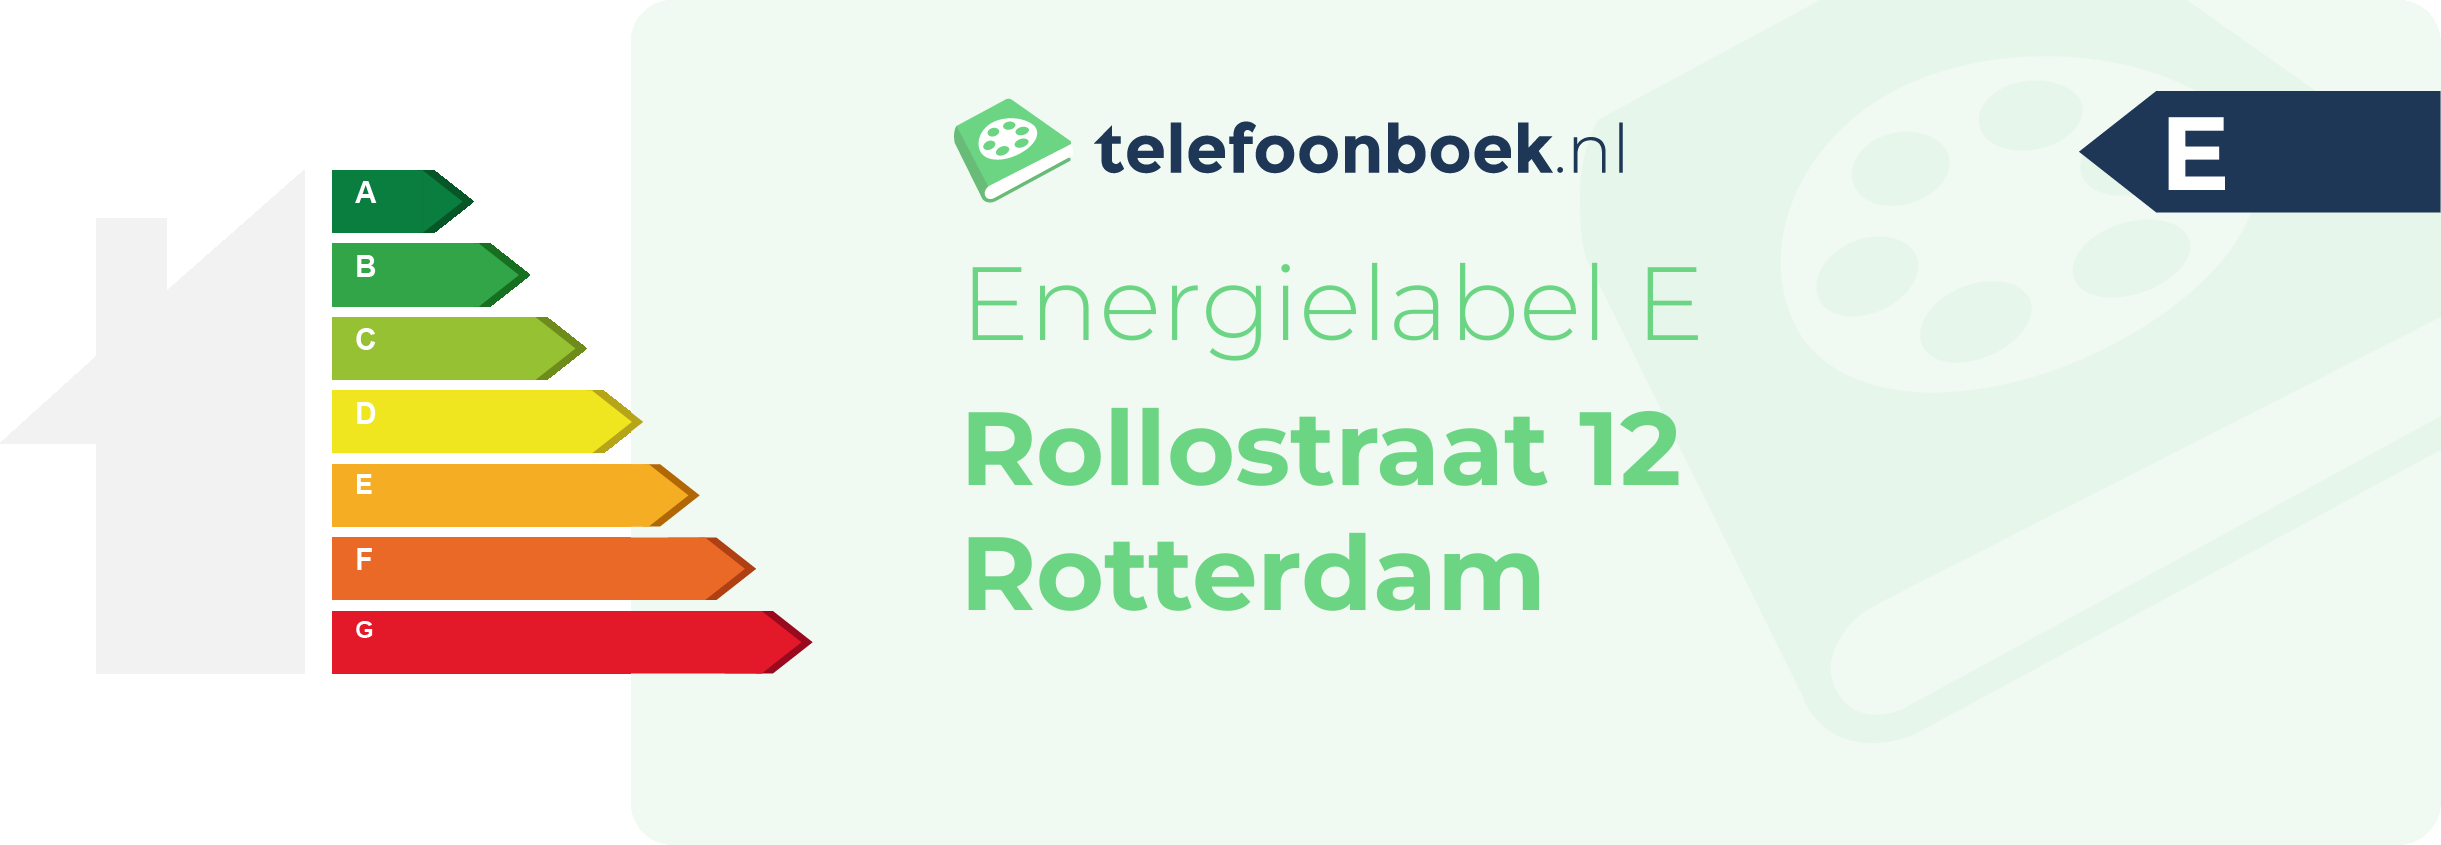 Energielabel Rollostraat 12 Rotterdam